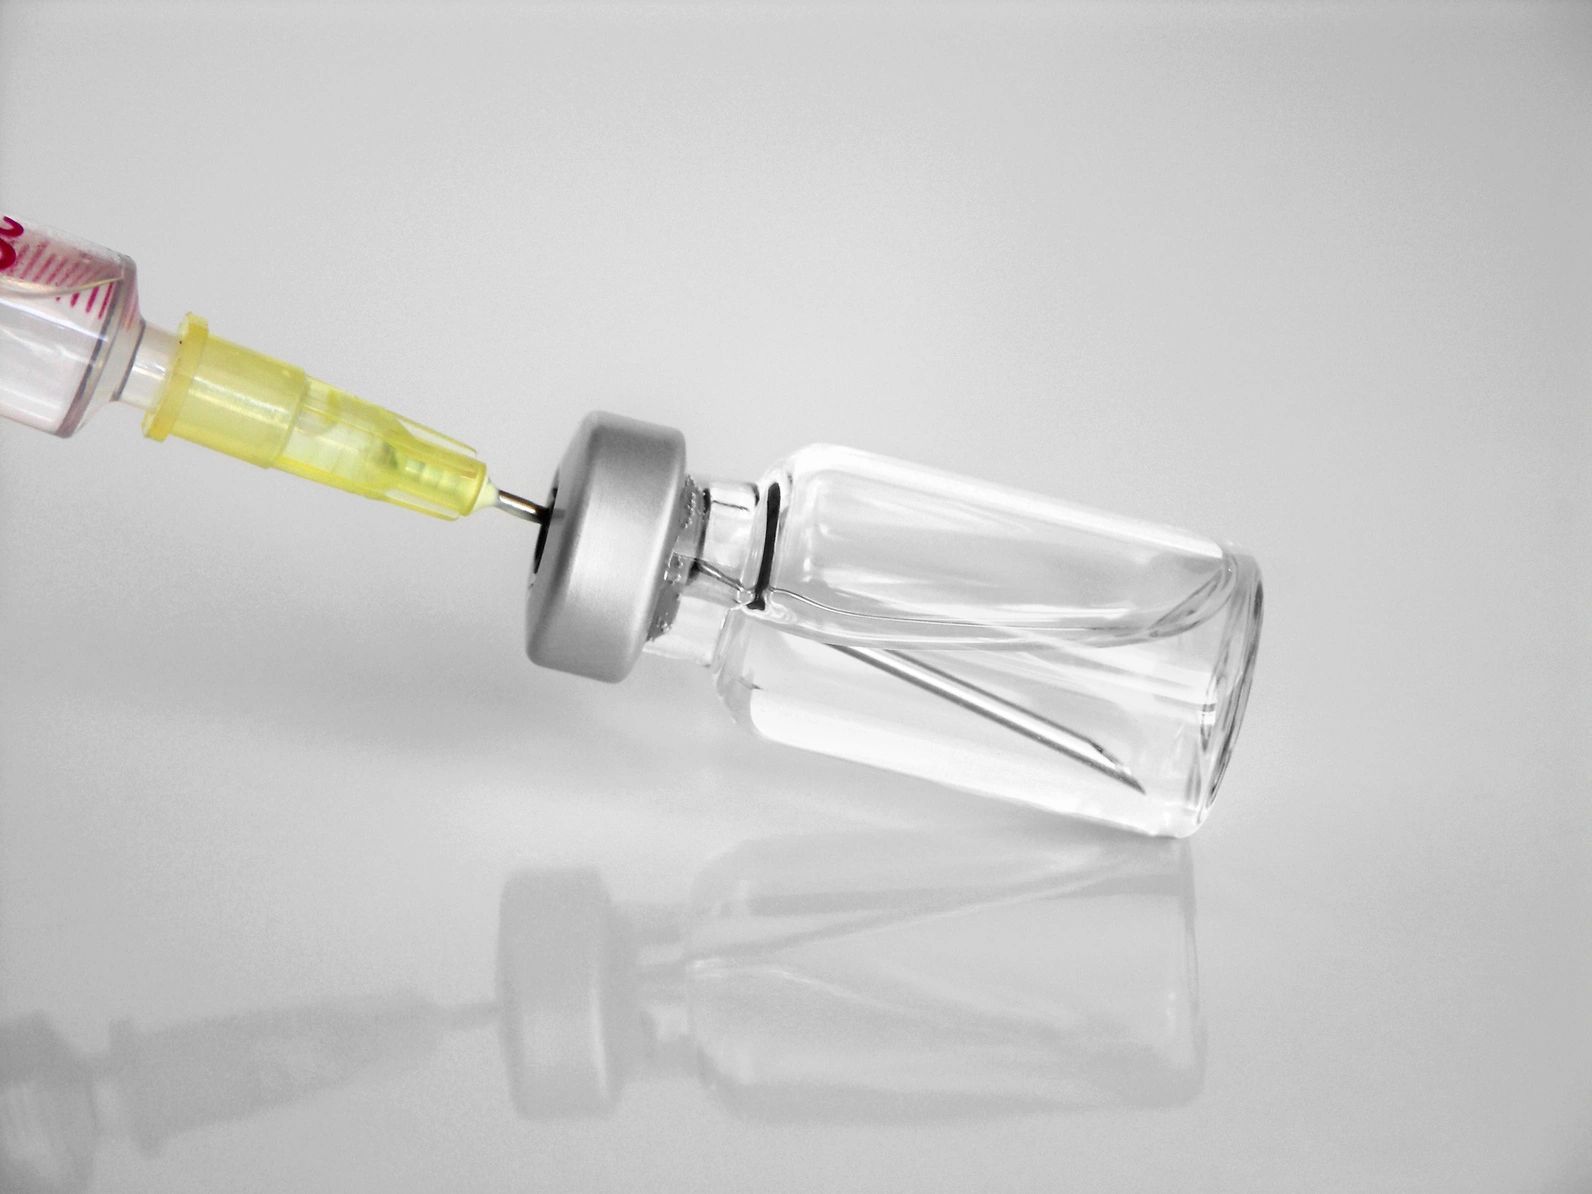 syringe in medicine vial